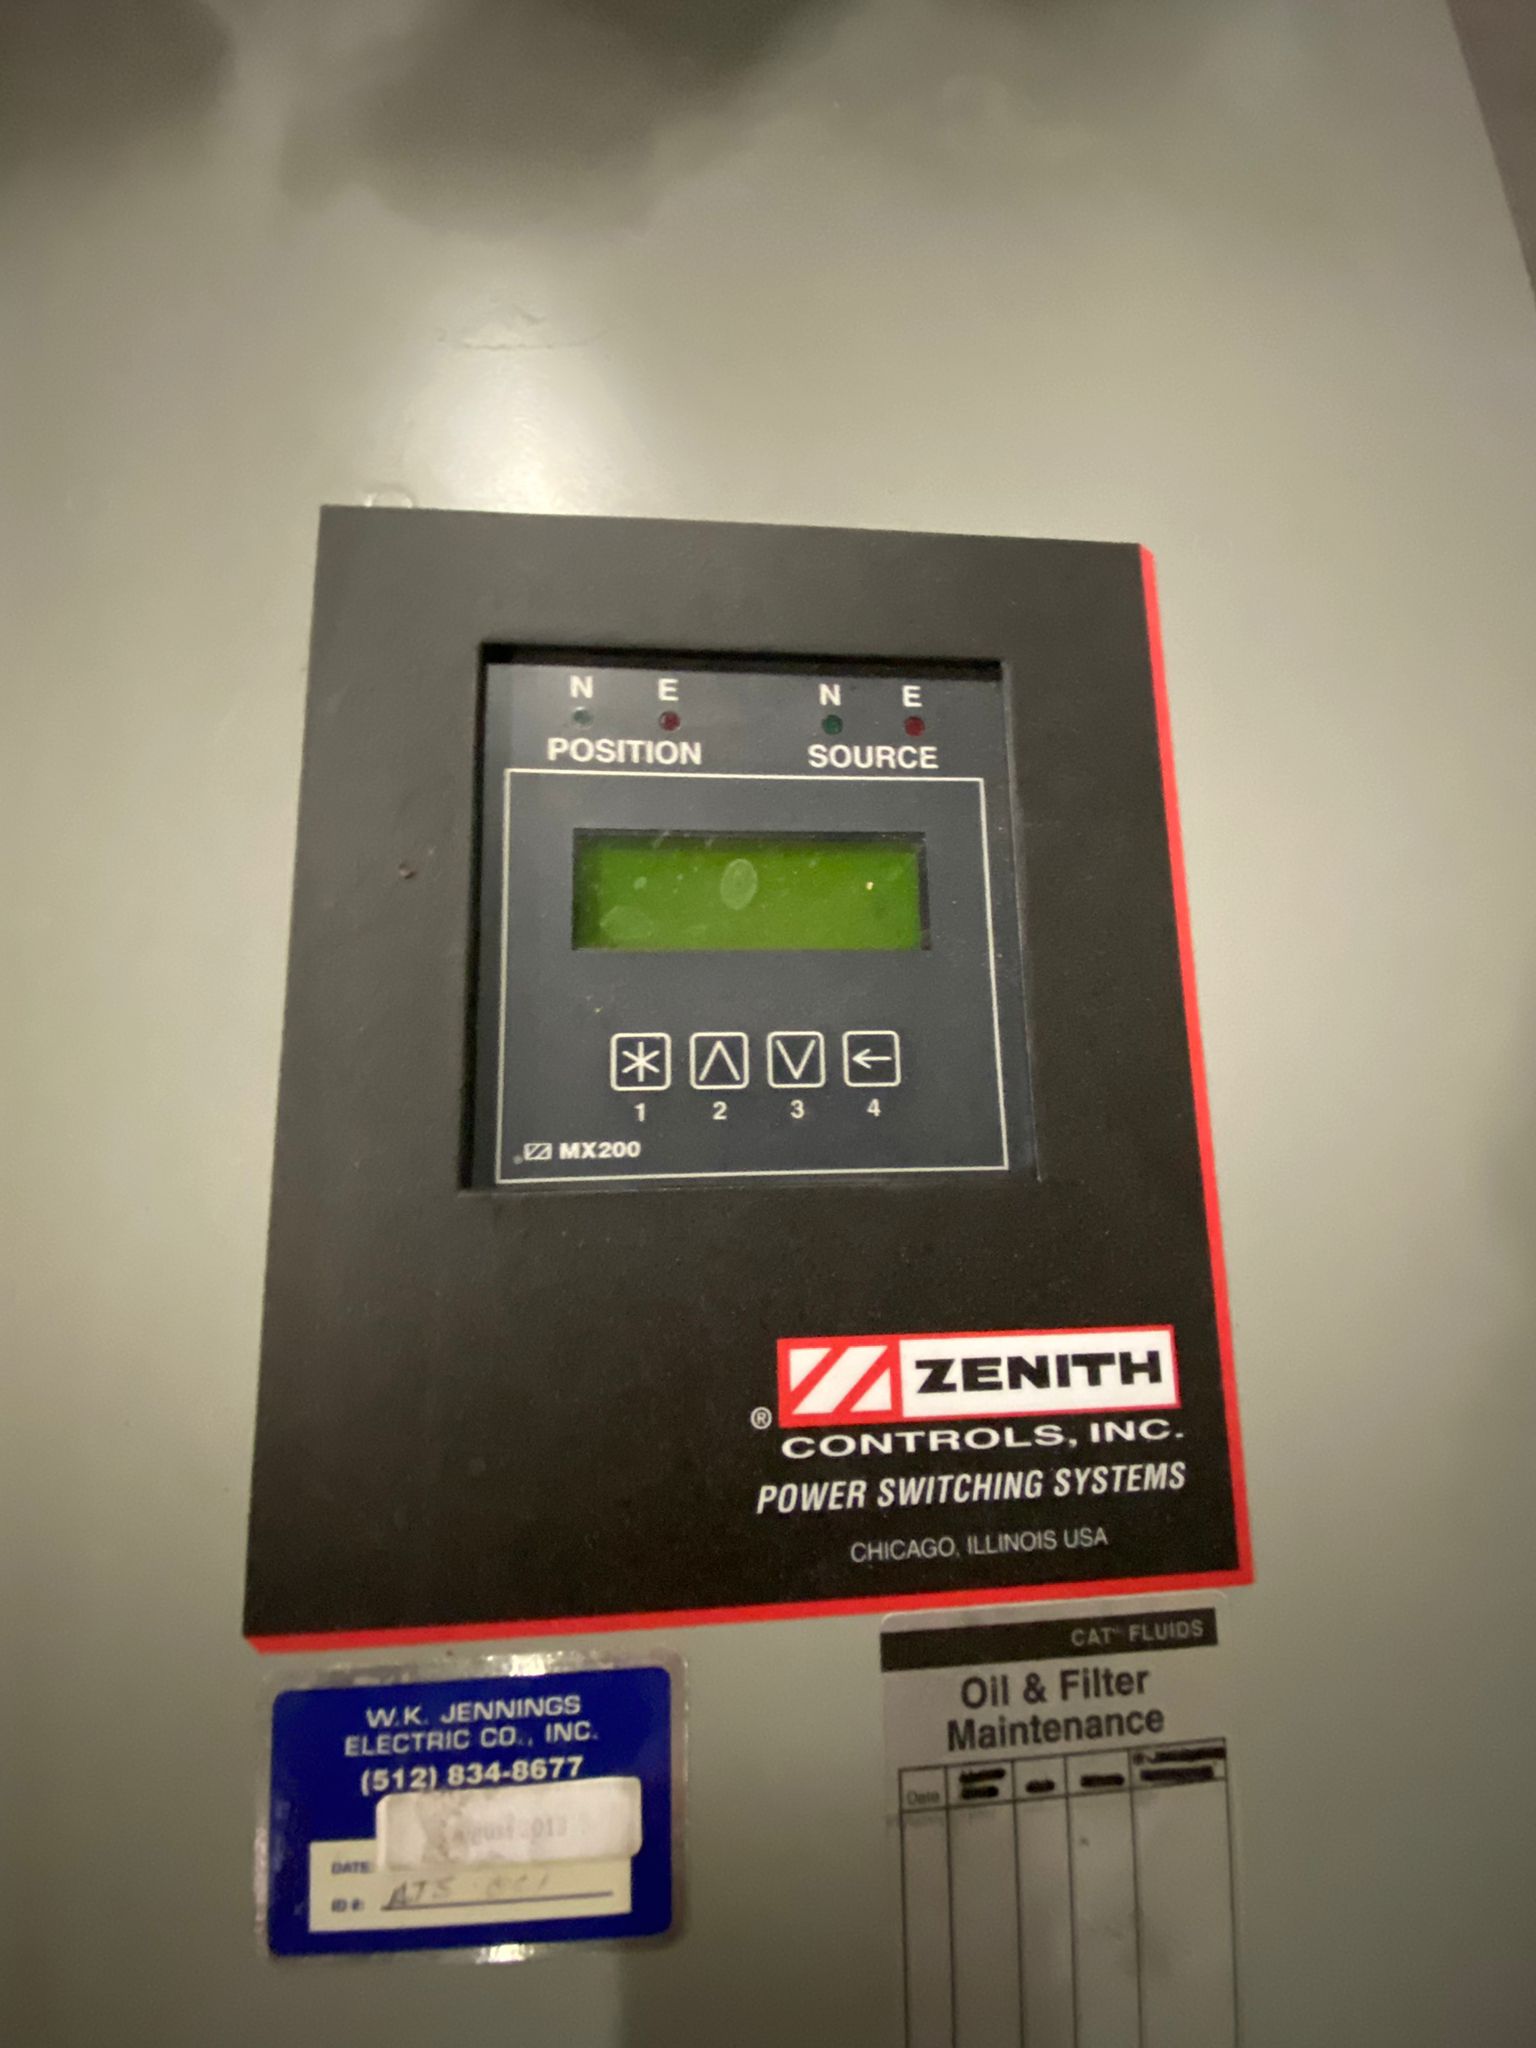 Zenith ZTSDL300EC-7 3000 Amp Automatic Transfer Switch